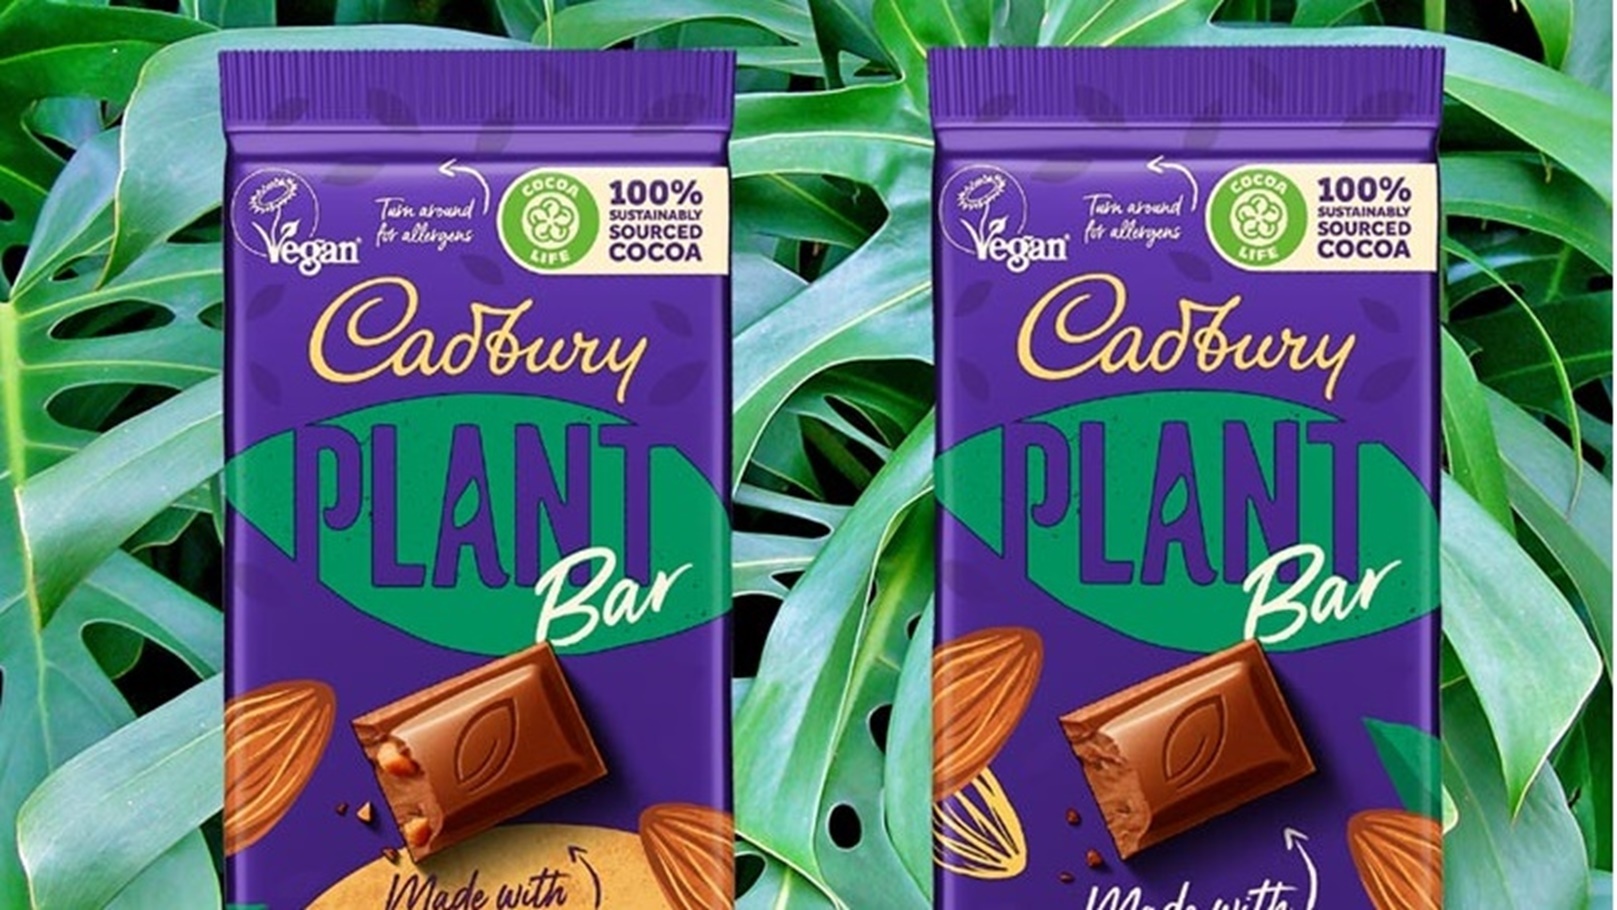 Cadbury-plant-bar-chocolate